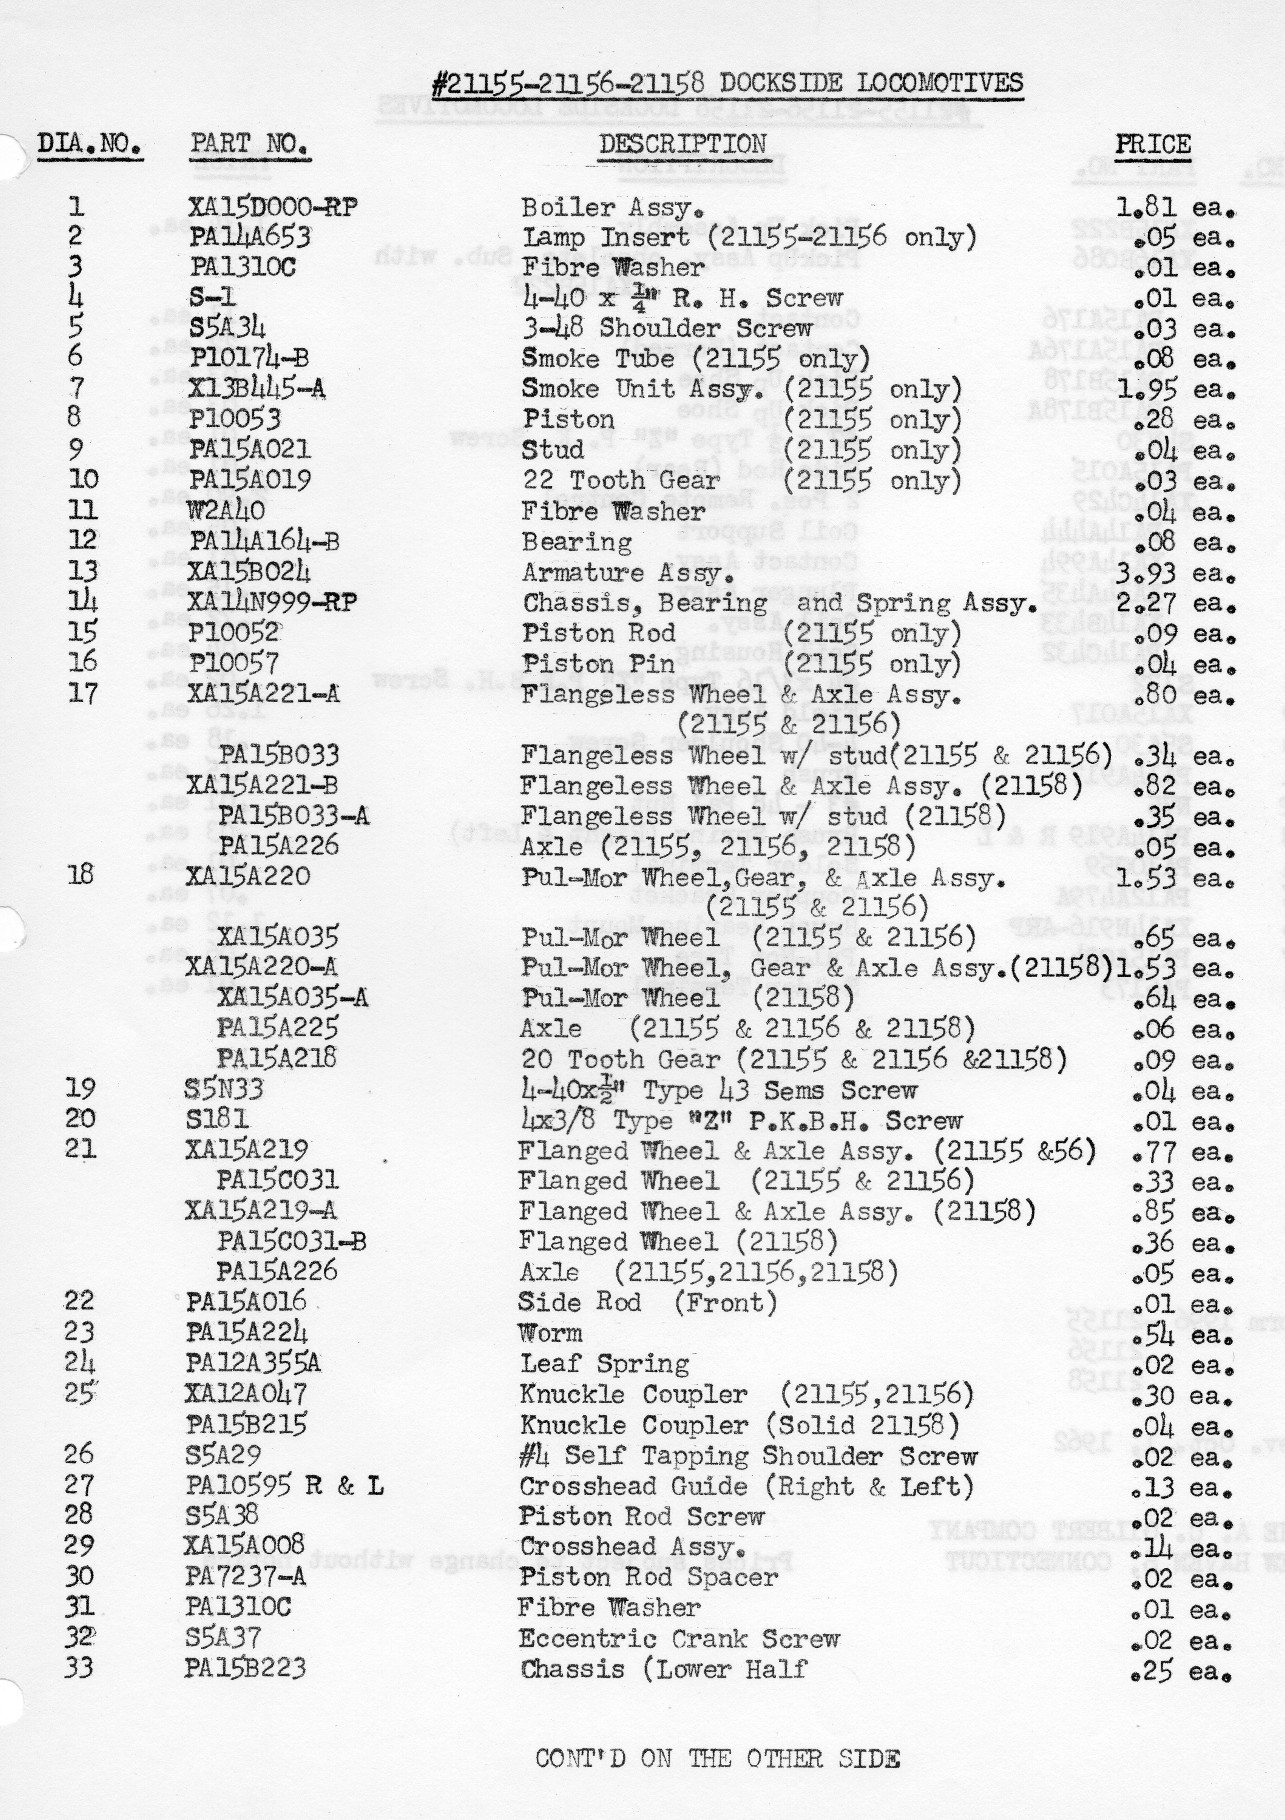 American Flyer Locomotive 21155 Docksider Switcher Parts List - Page 1